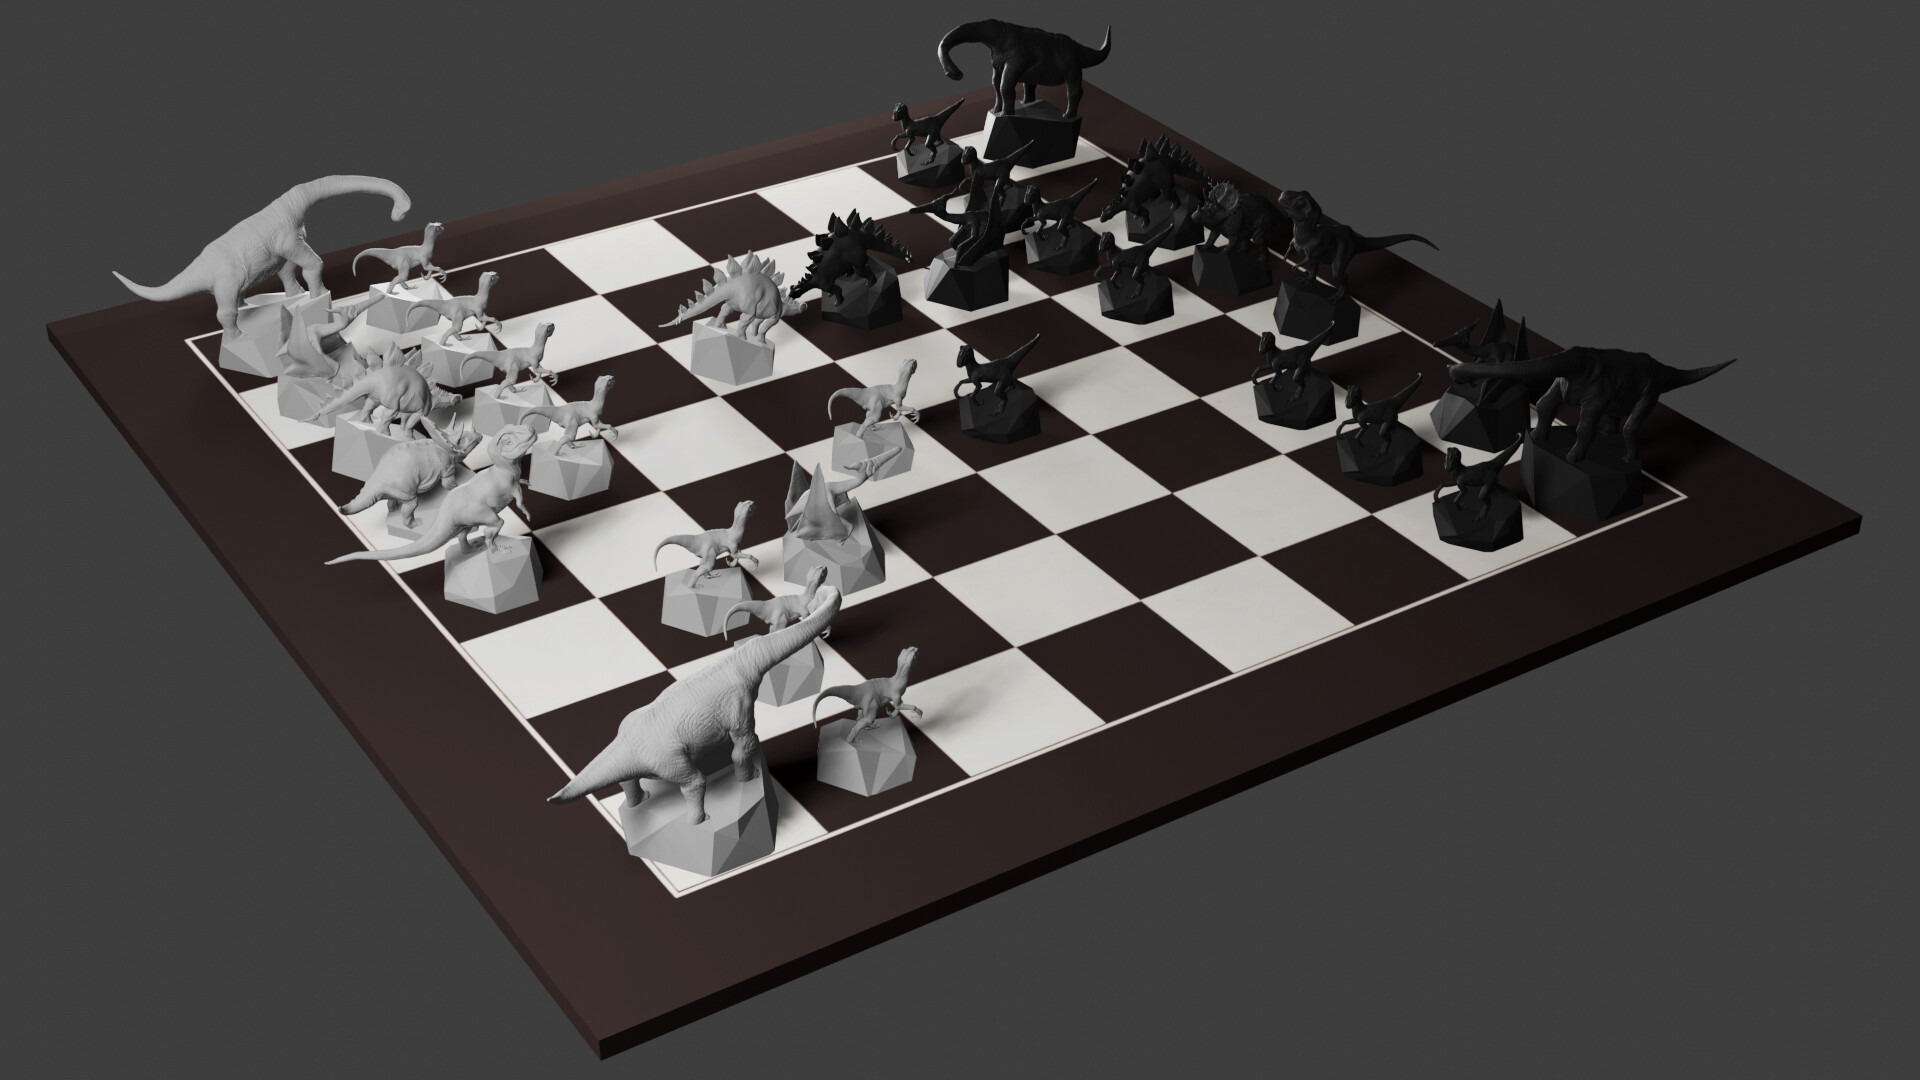 Limited edition Dinosaur Designs chess set - The Interiors Addict